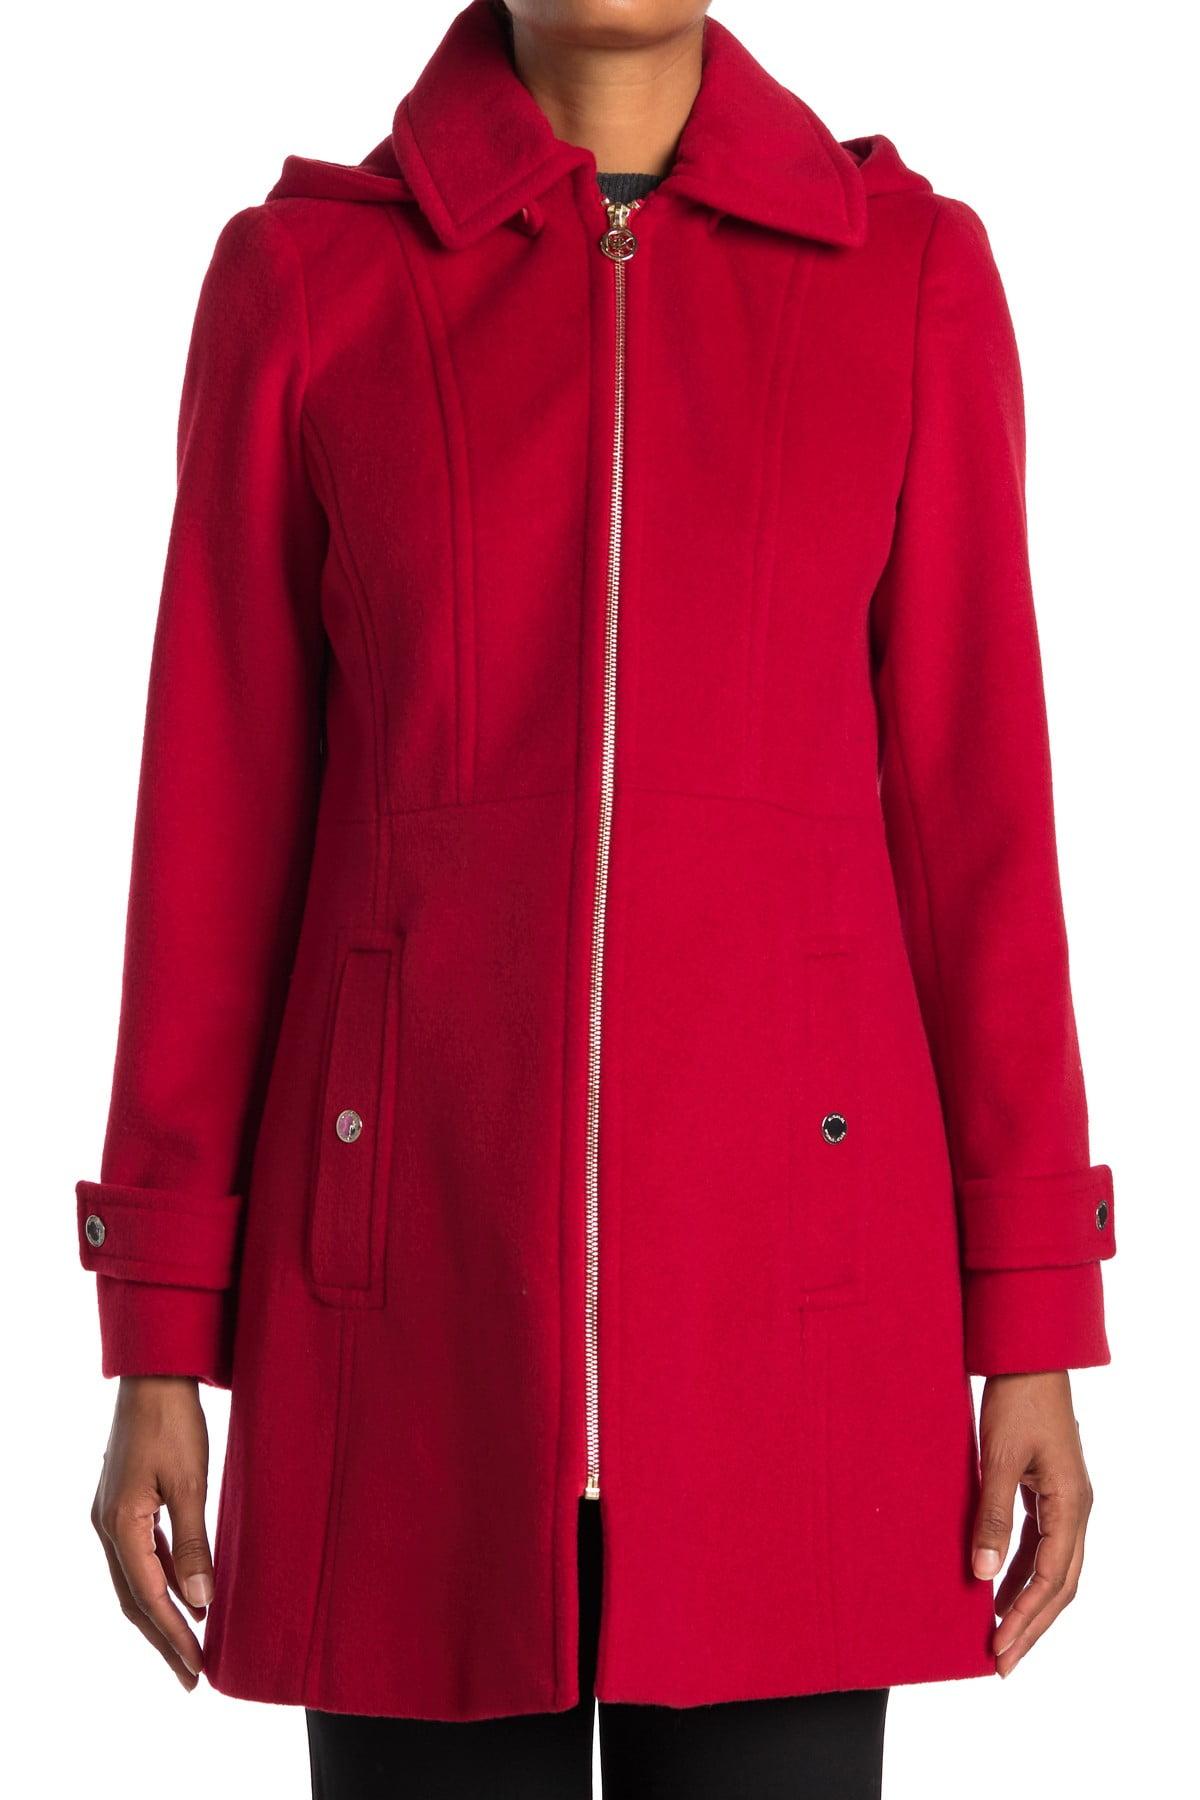 MICHAEL Michael Kors Zip Front Wool Blend Hooded Coat in Red - Lyst